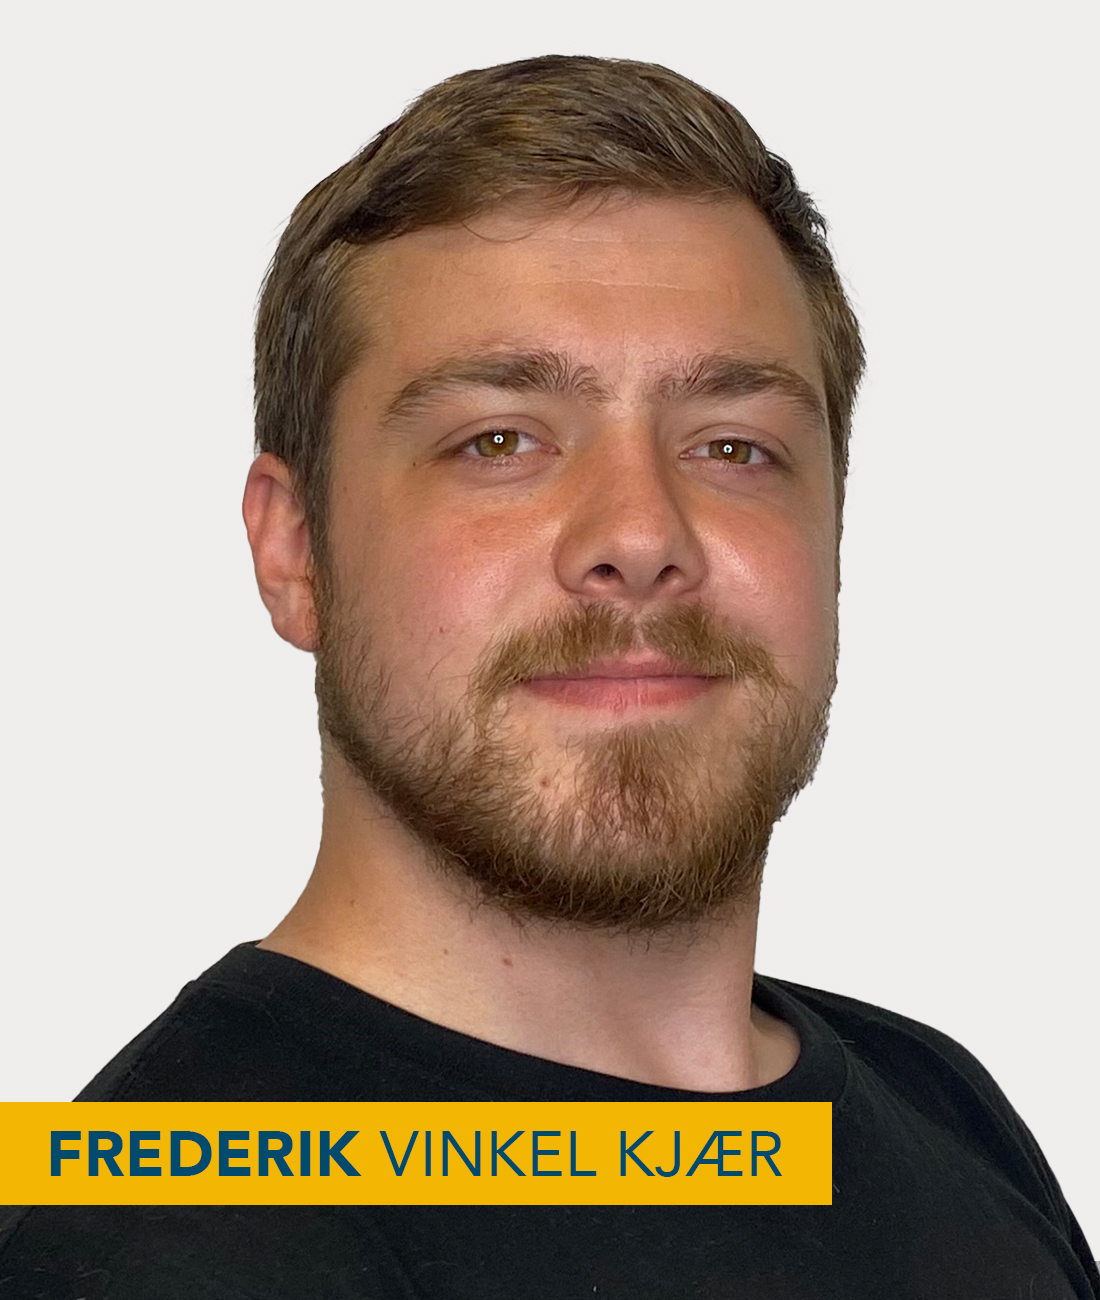 Frederik Vinkel Kjær